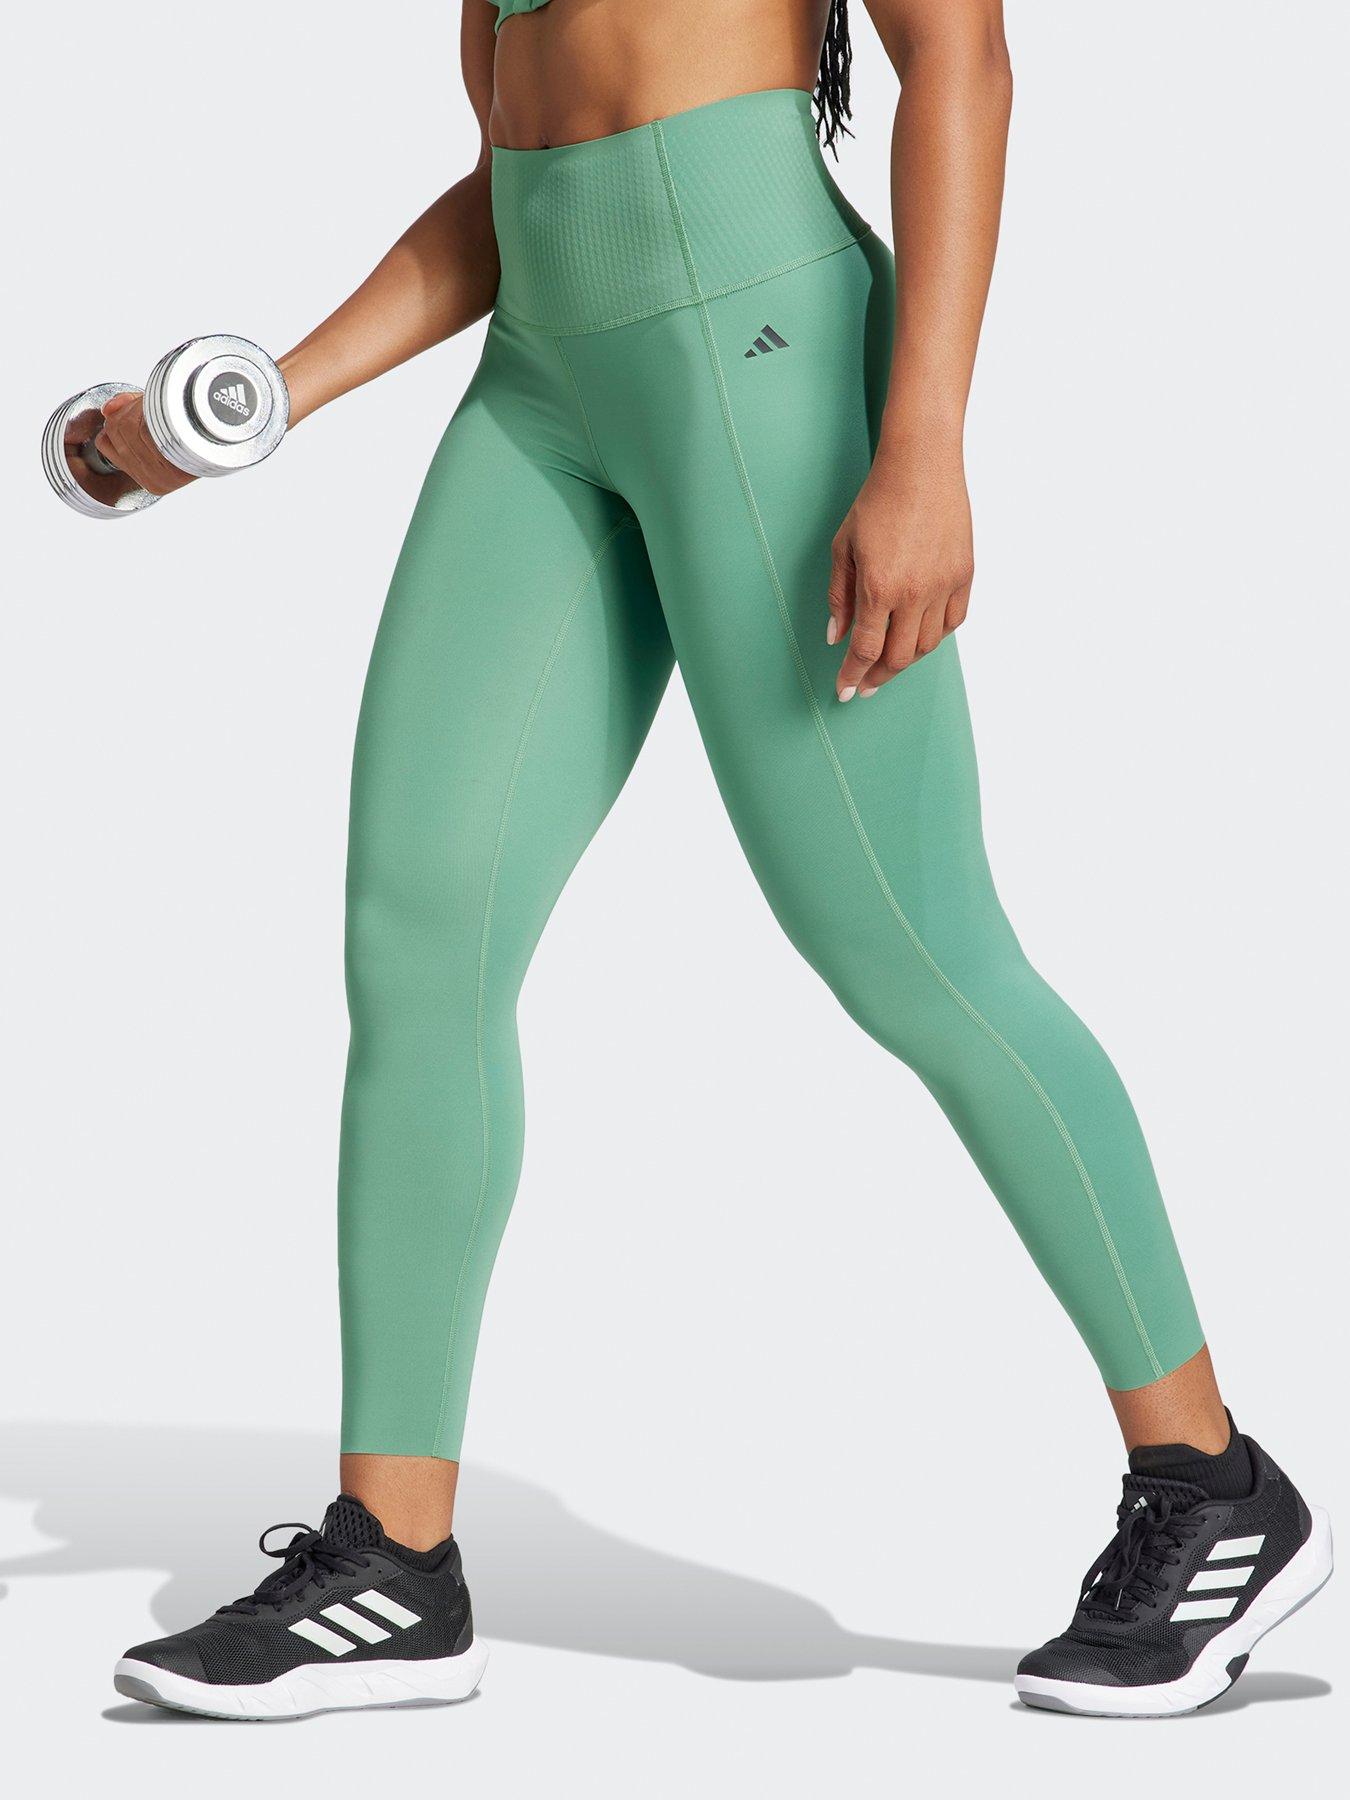 Adidas Climalite Cotton Cuffed Workout Pants For Woman Stock Photo